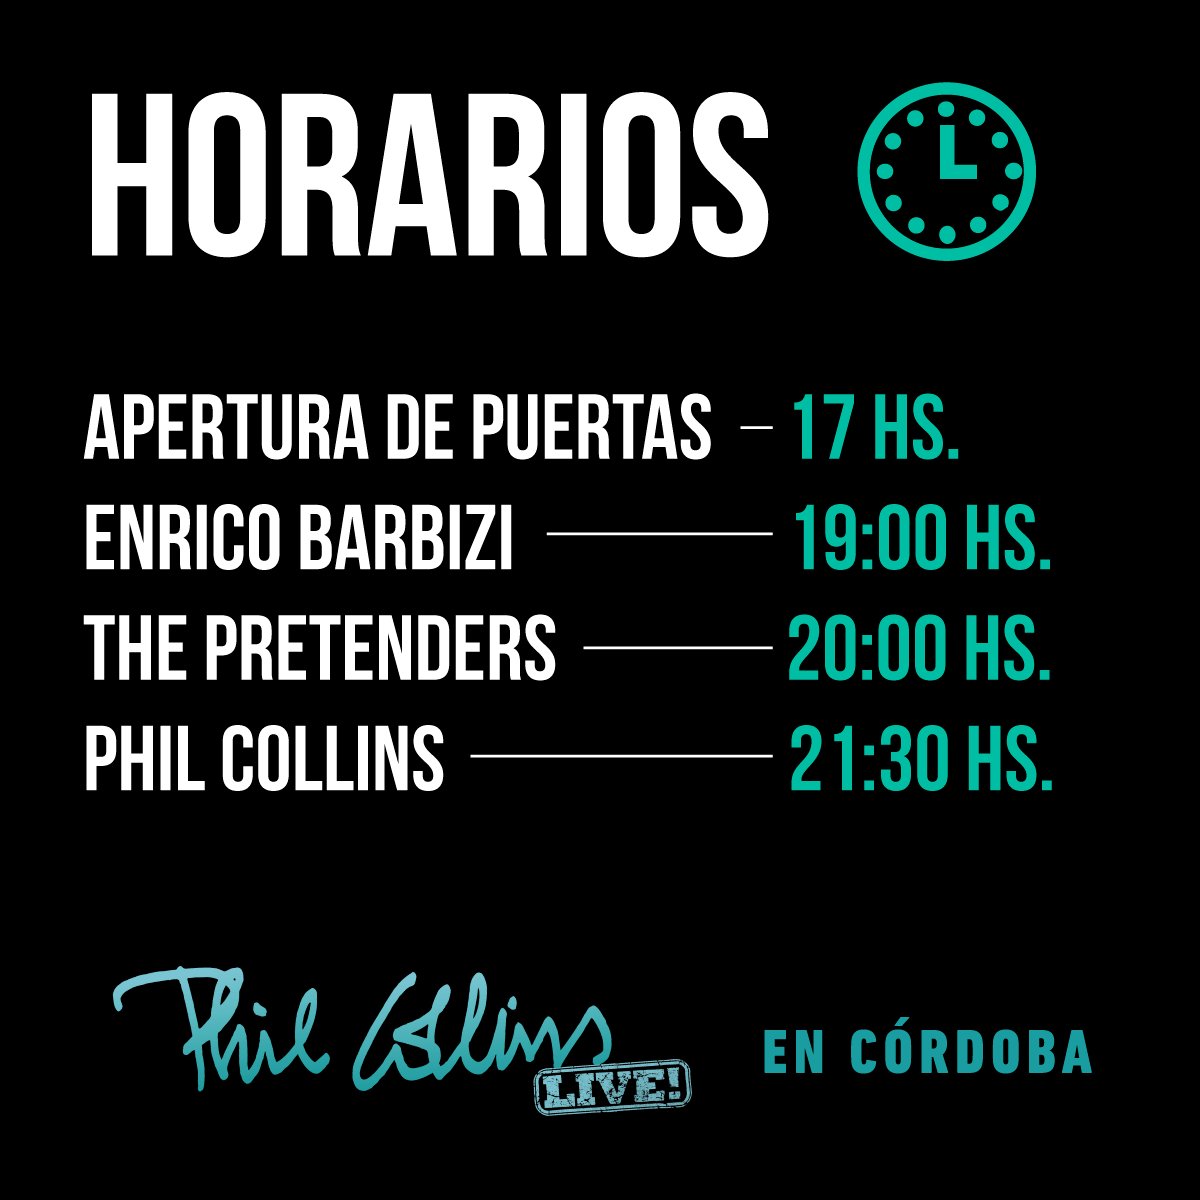 Hoy llega Phil Collins a Córdoba • Canal C